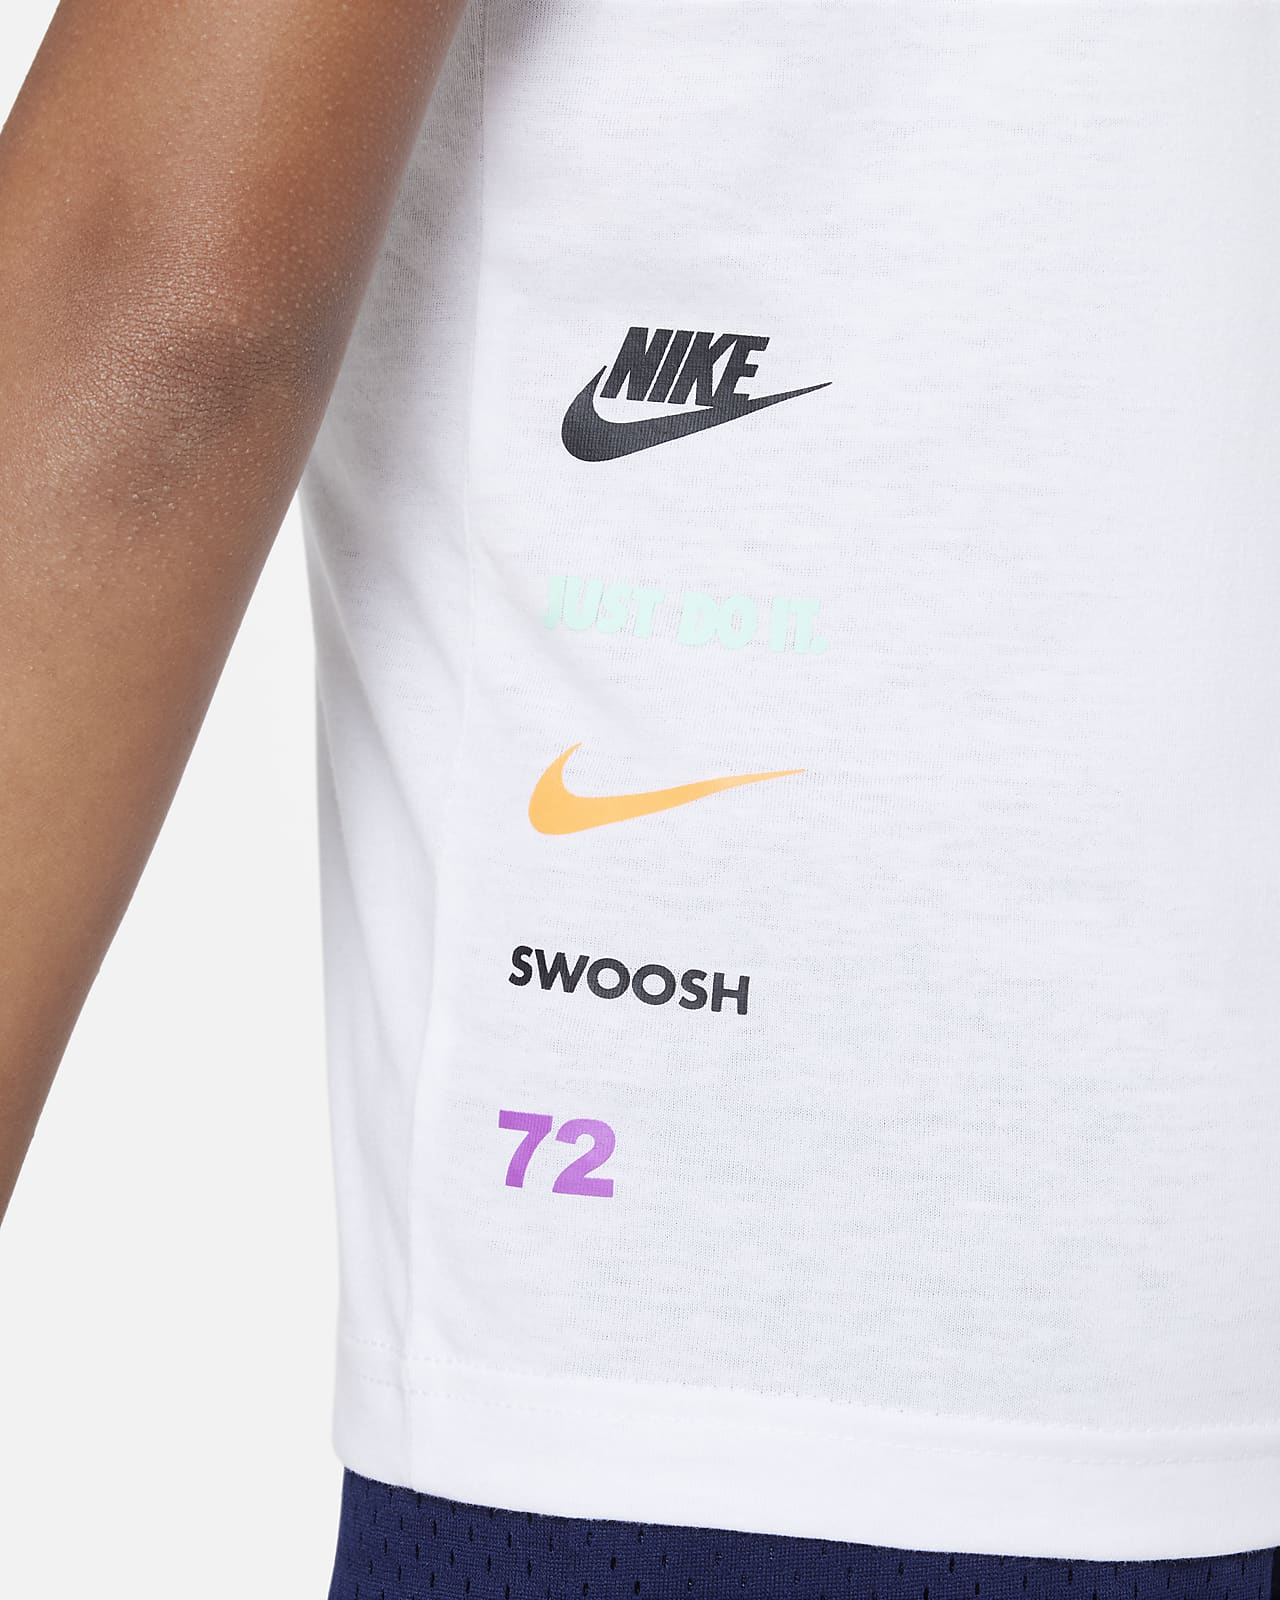 Nike Younger Kids' Nike Air T-Shirt. Nike SE